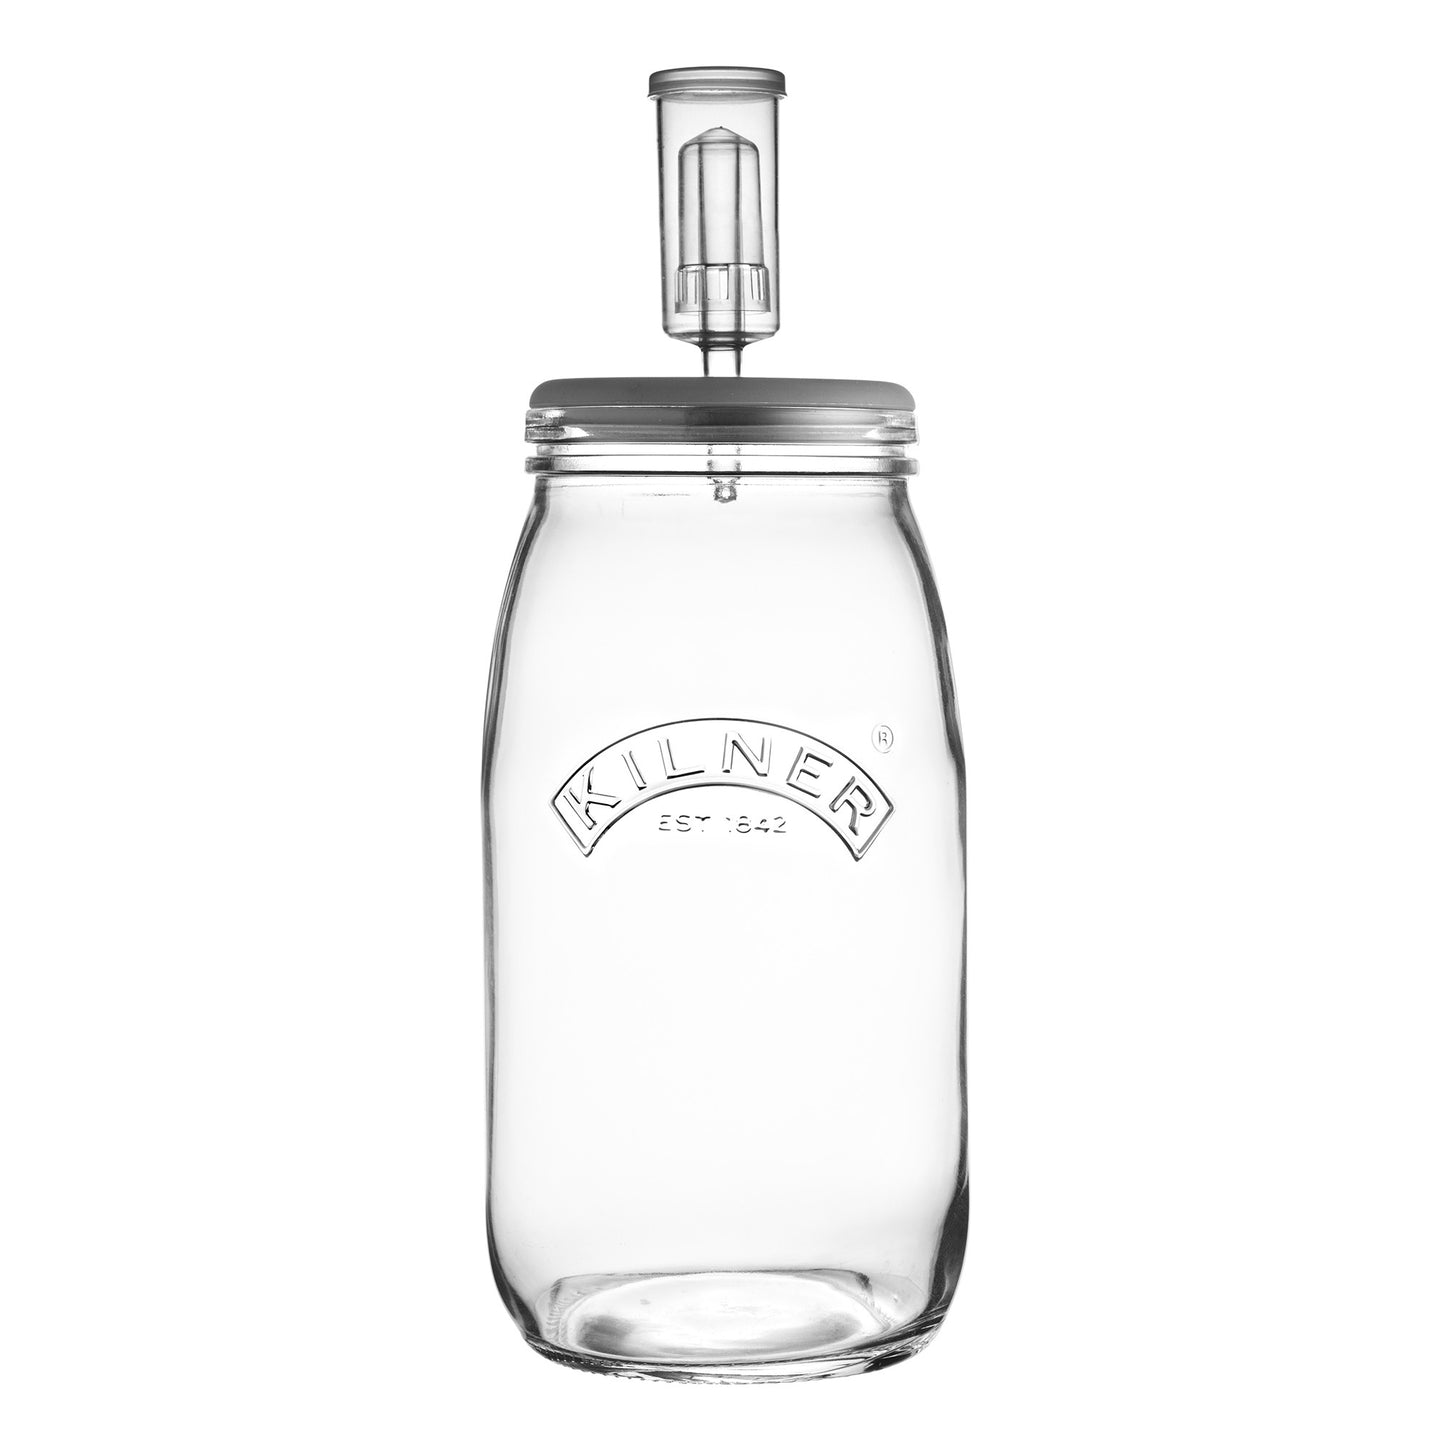 glass jar for fermentation kit.